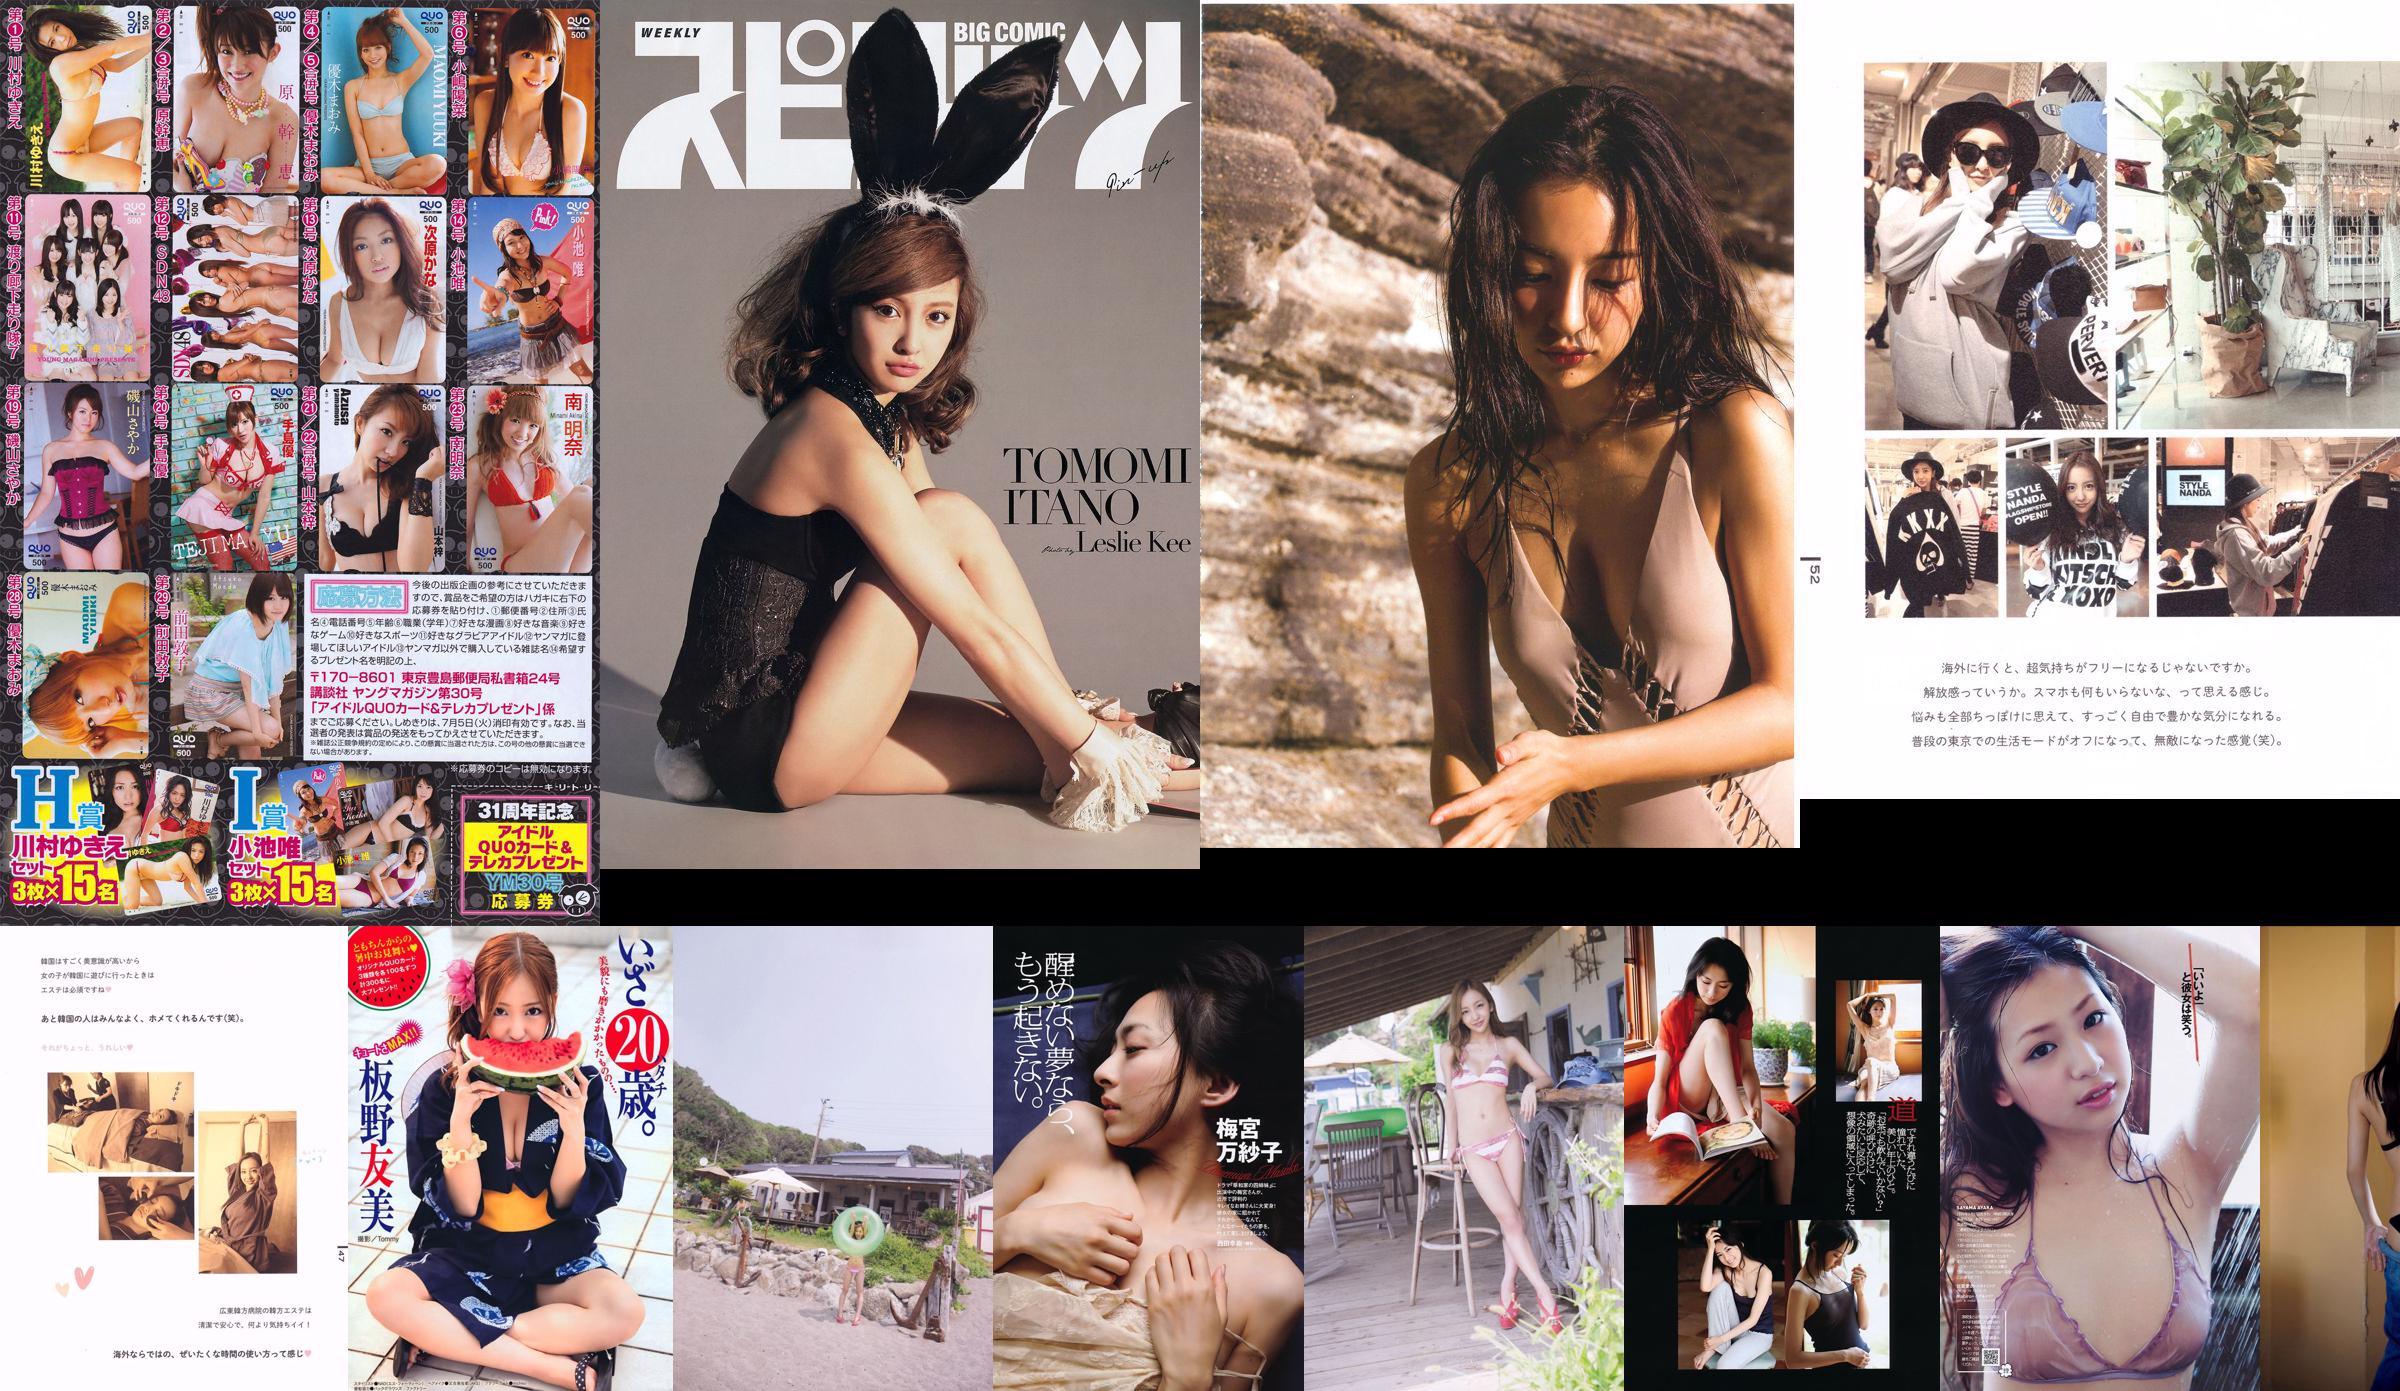 [Tygodnik Big Comic Spirits] Itano Tomomi 2014 nr 30 Photo Magazine No.93b5c5 Strona 1